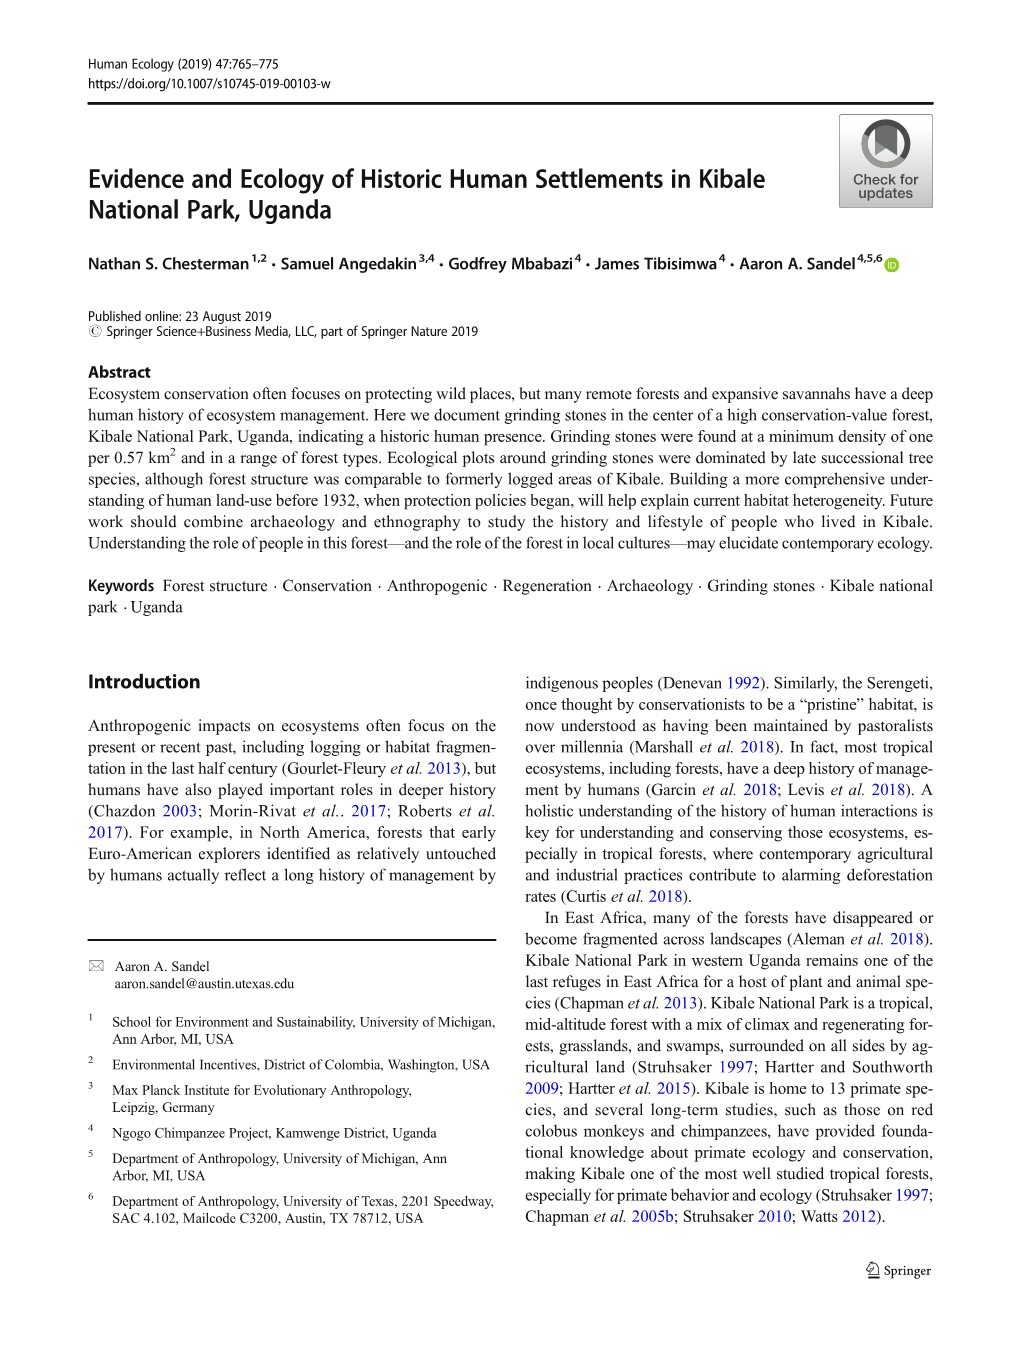 Evidence and Ecology of Historic Human Settlements in Kibale National Park, Uganda